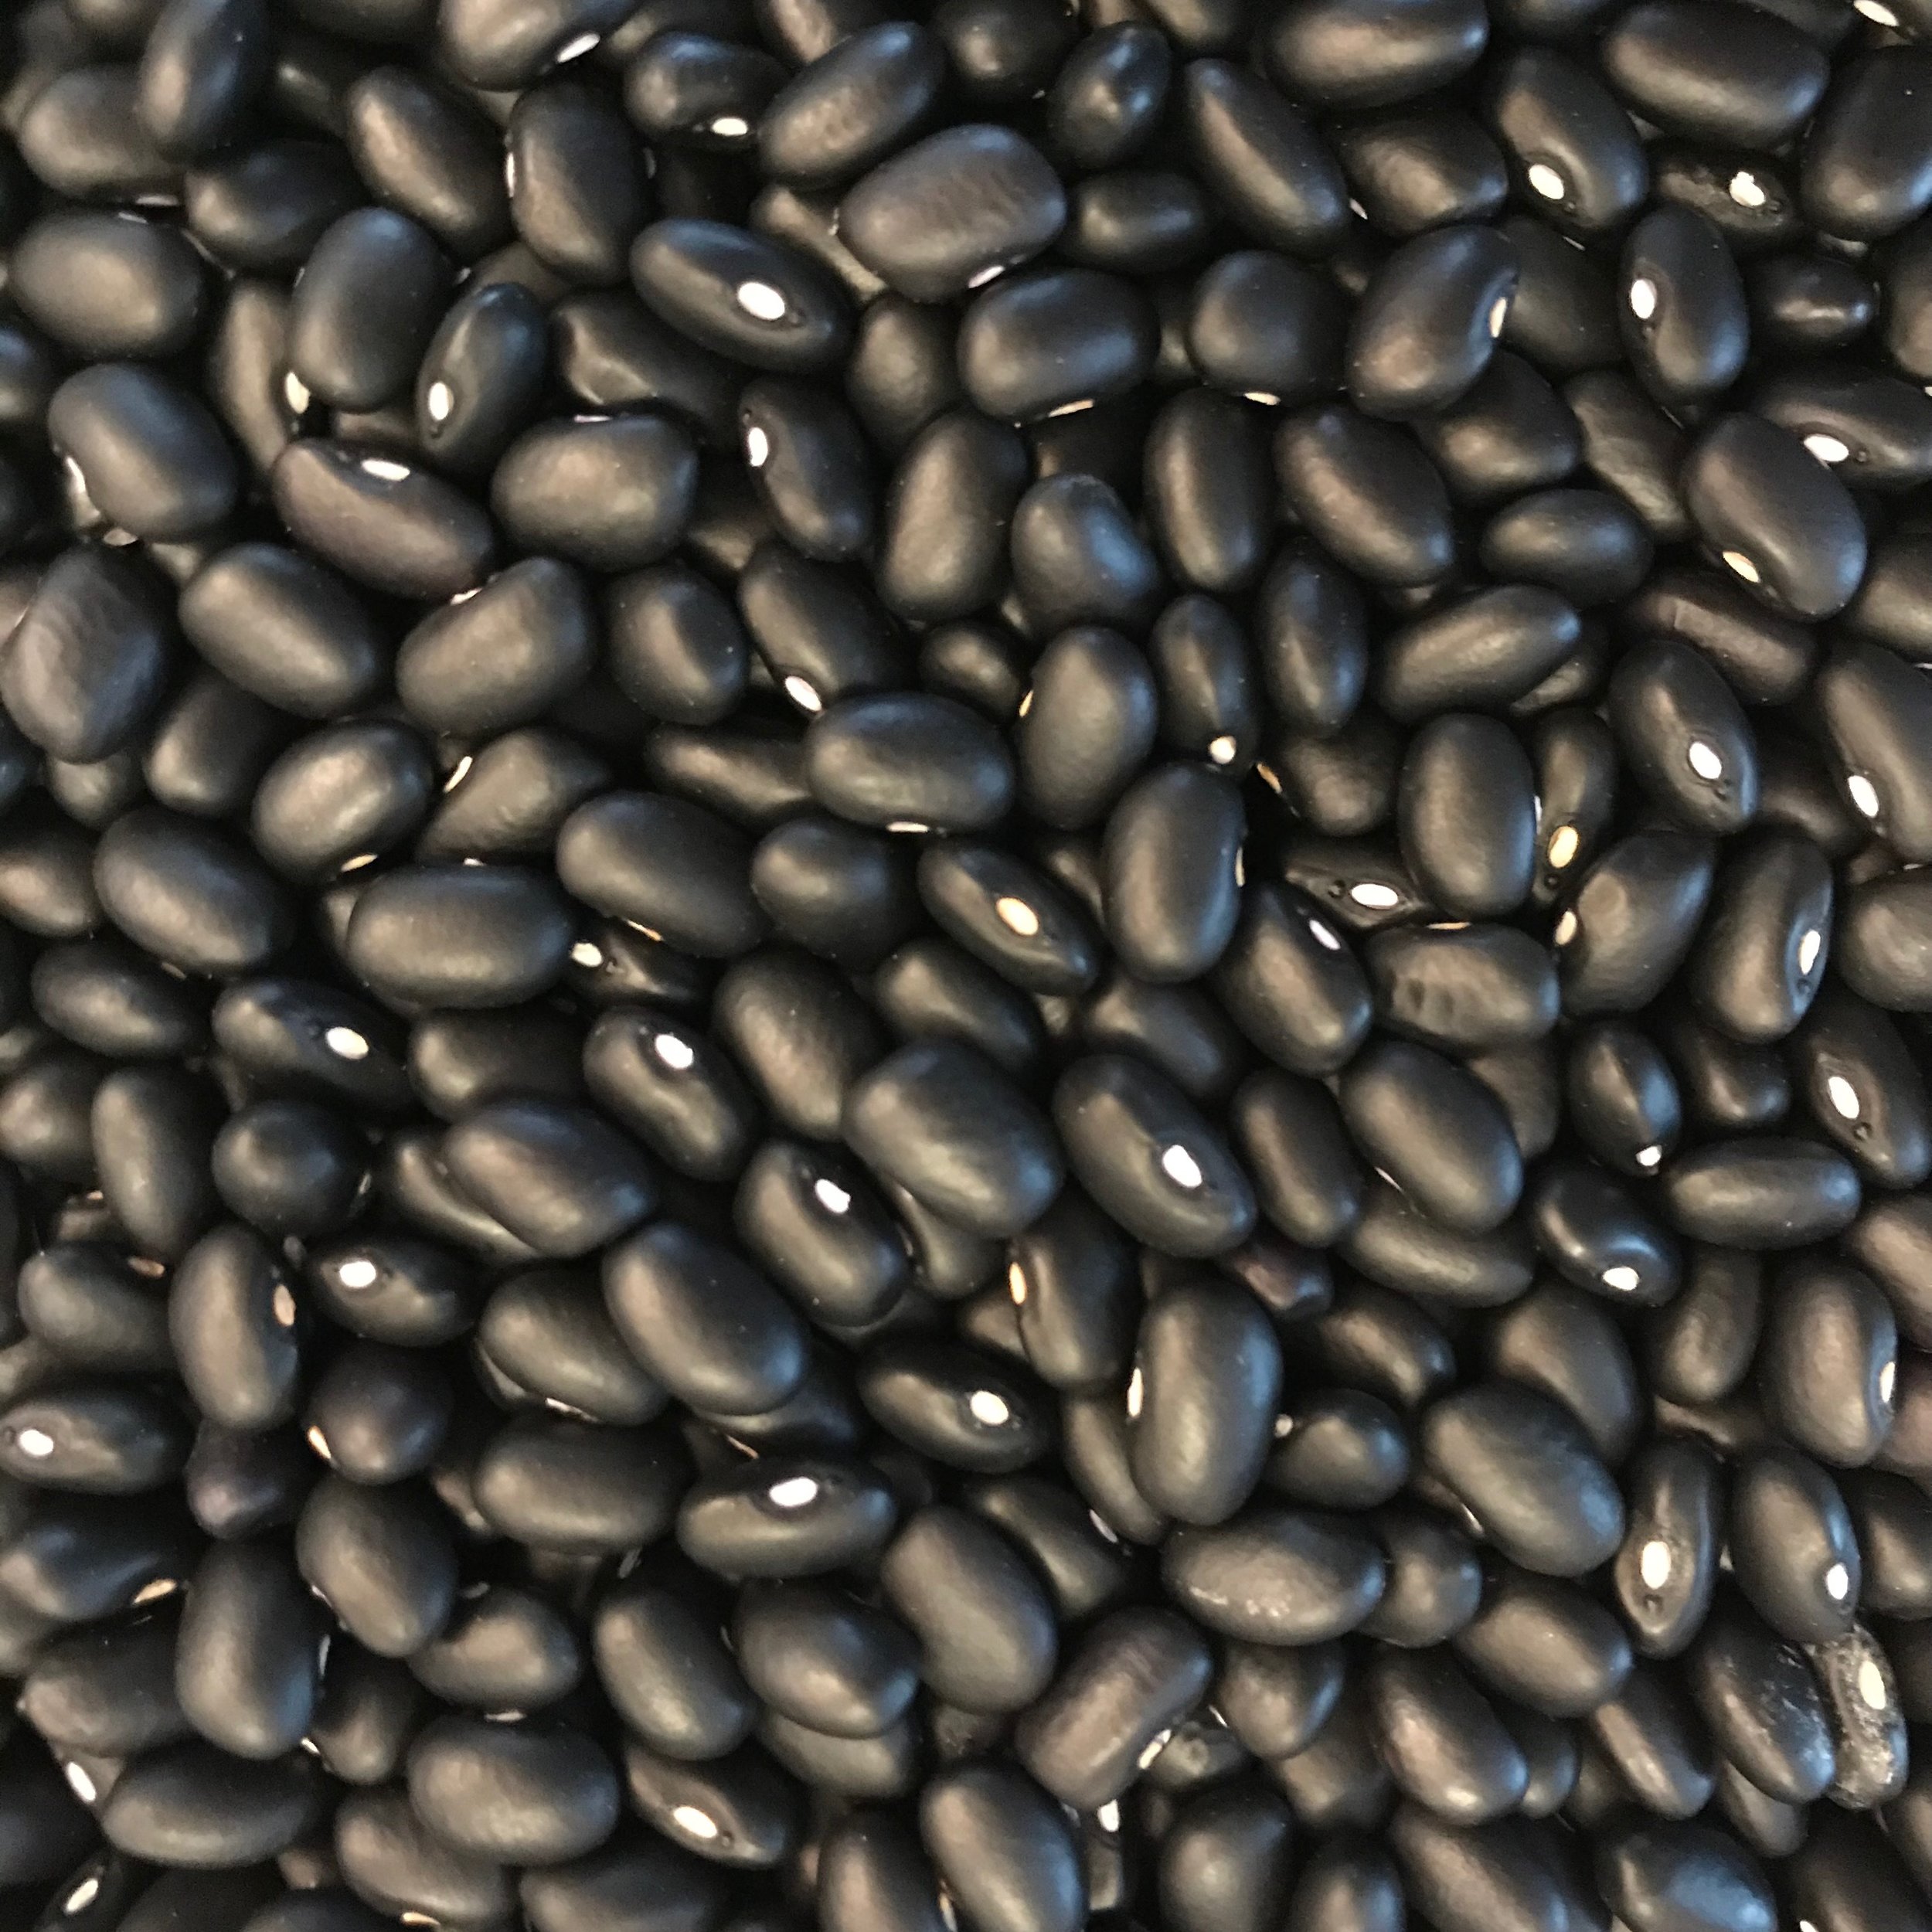  Autumn black bean harvest 